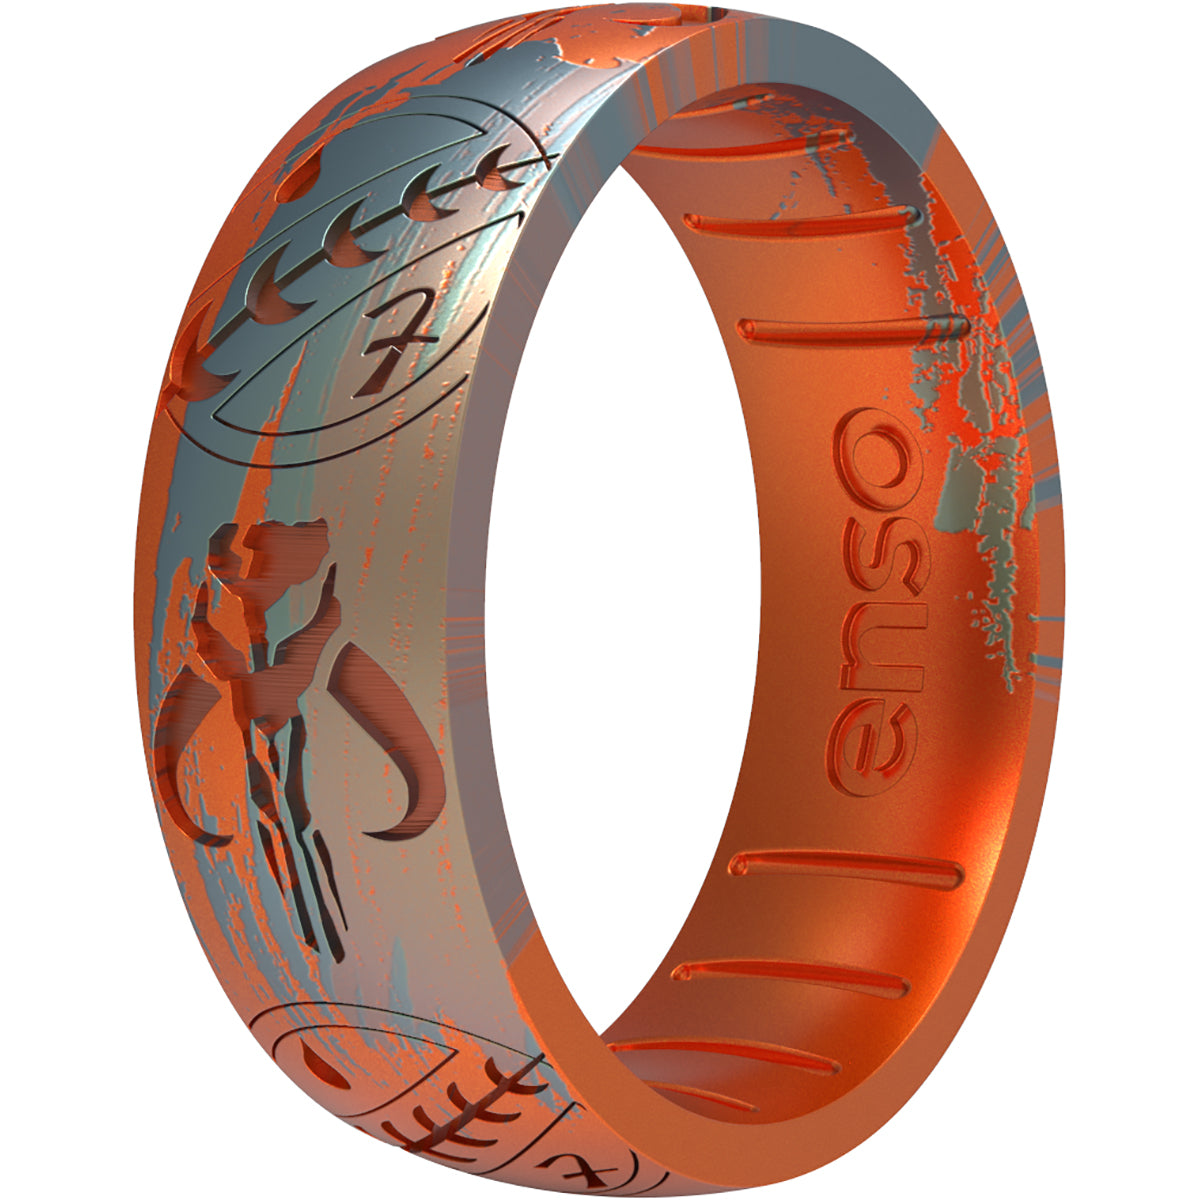 Enso Rings Star Wars Boba Fett Galactic Outlaw Silicone Ring - Phoenix/Ash Enso Rings